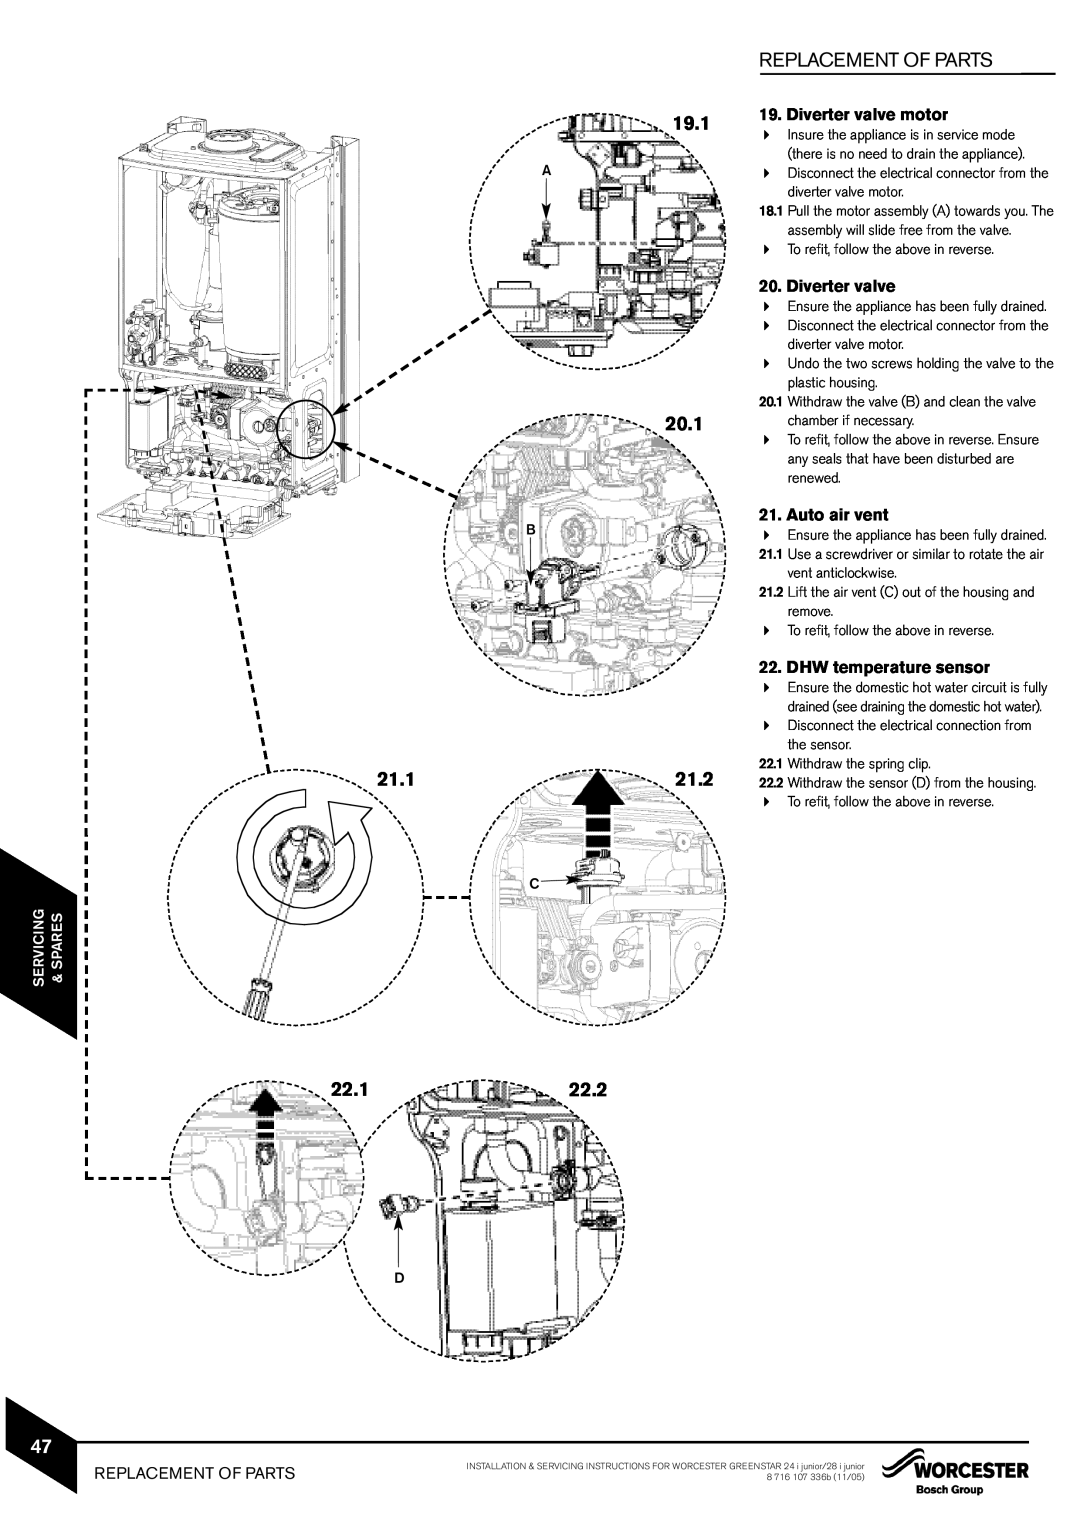 Bosch Appliances 28i junior Replacement Of Parts, 19.1, 20.1, 21.1, 21.2, 22.1, 22.2, Diverter valve motor, Auto air vent 